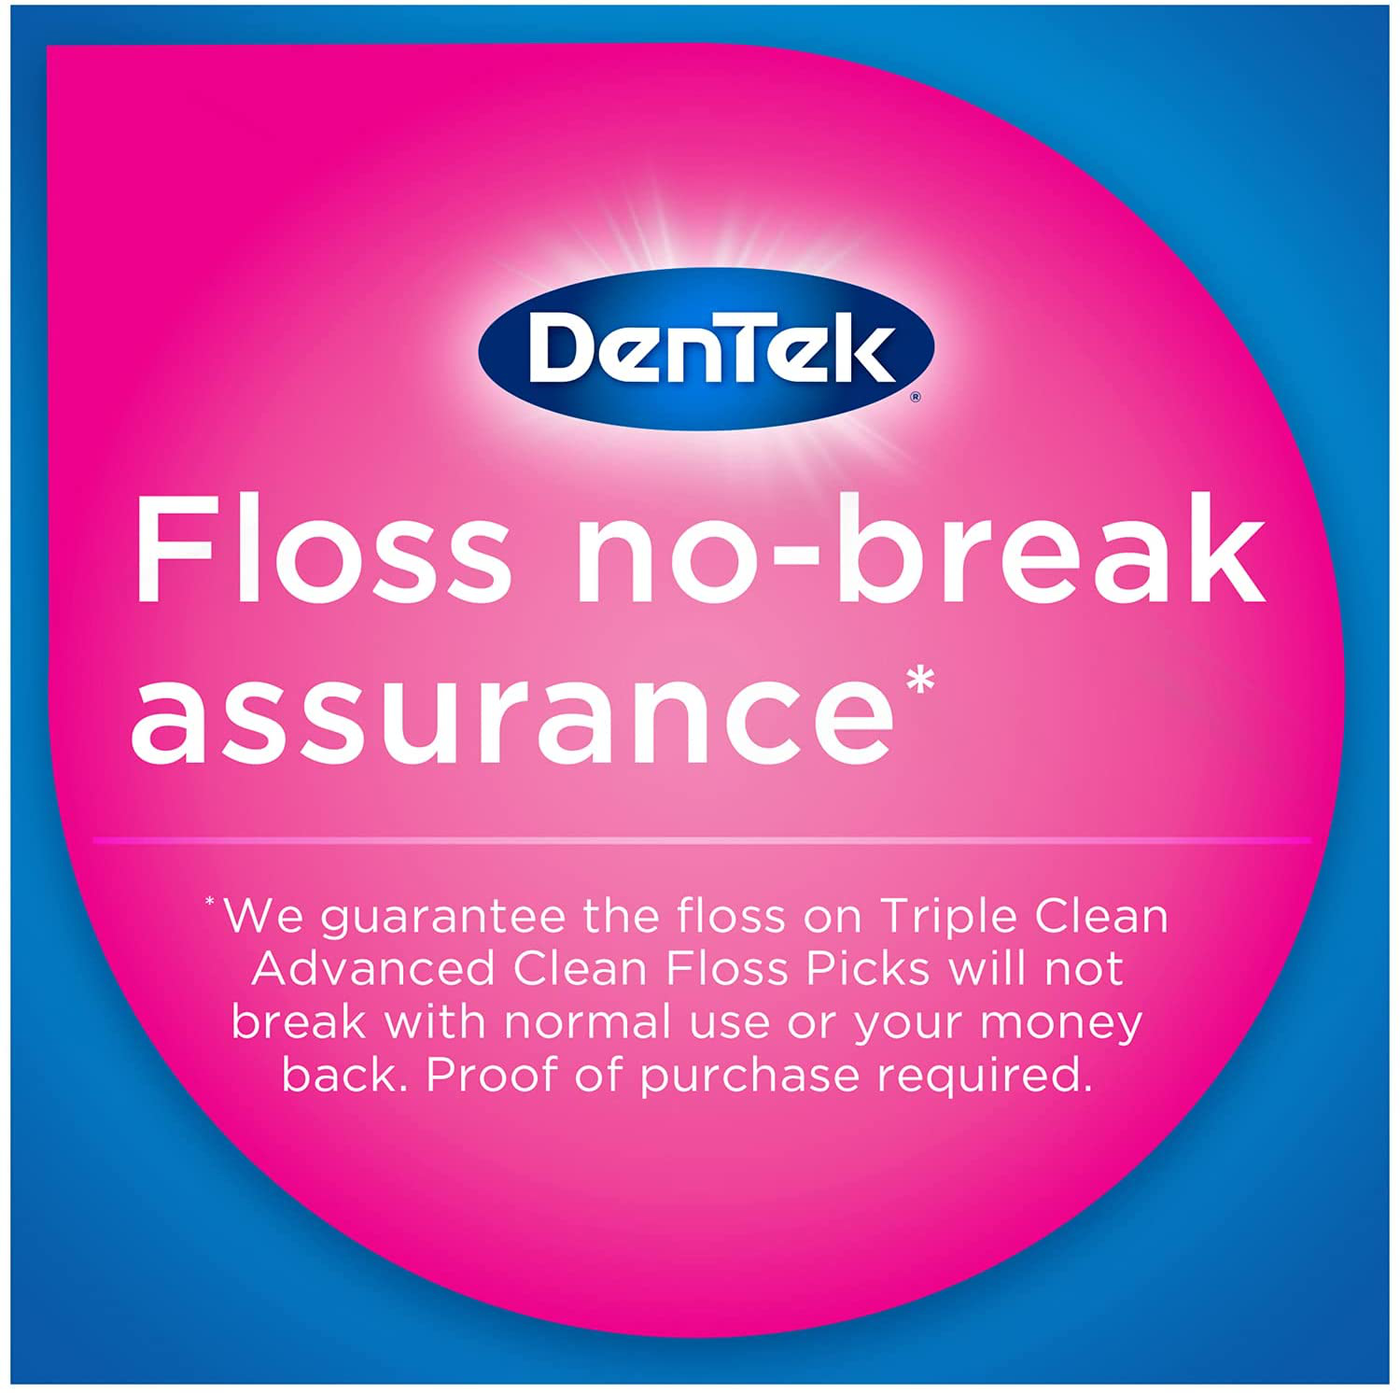 DenTek Triple Clean Advanced Clean Floss Picks, No Break & No Shred Floss, 20 Count, 6 Pack